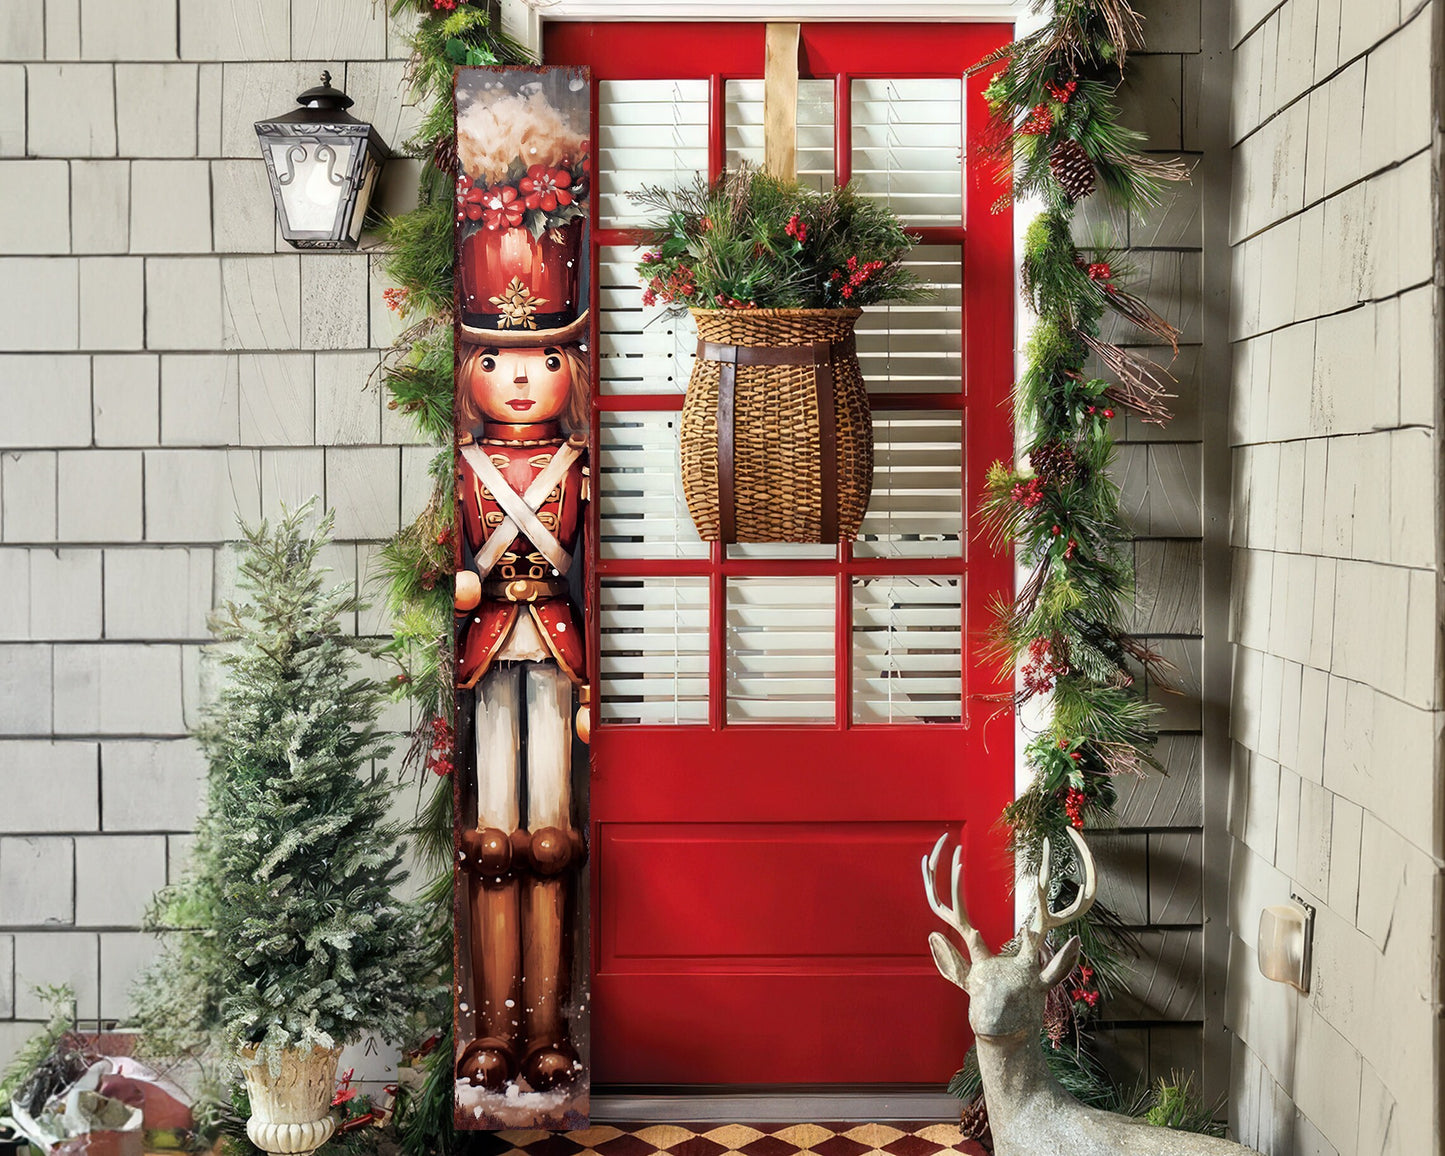 72in Girl Nutcracker Soldier Christmas Sign for Front Porch - Christmas Decor, Modern Farmhouse Entryway Decor for Front Door